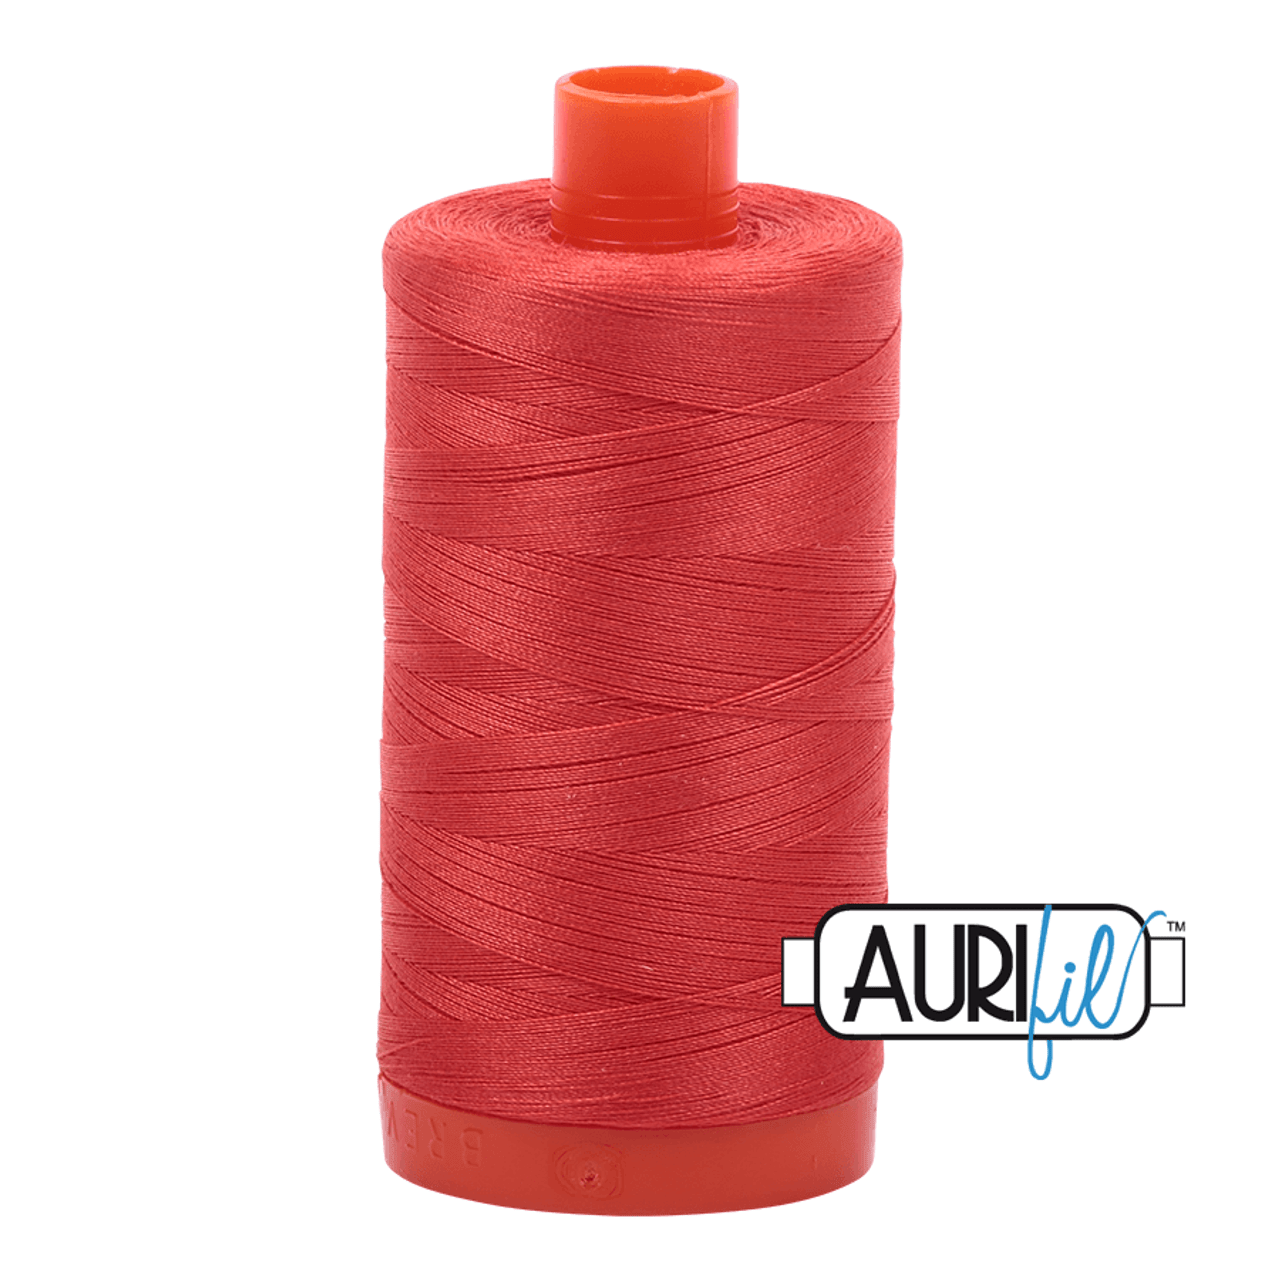 Aurifil Light Red Orange 50WT Quilting Thread 2277